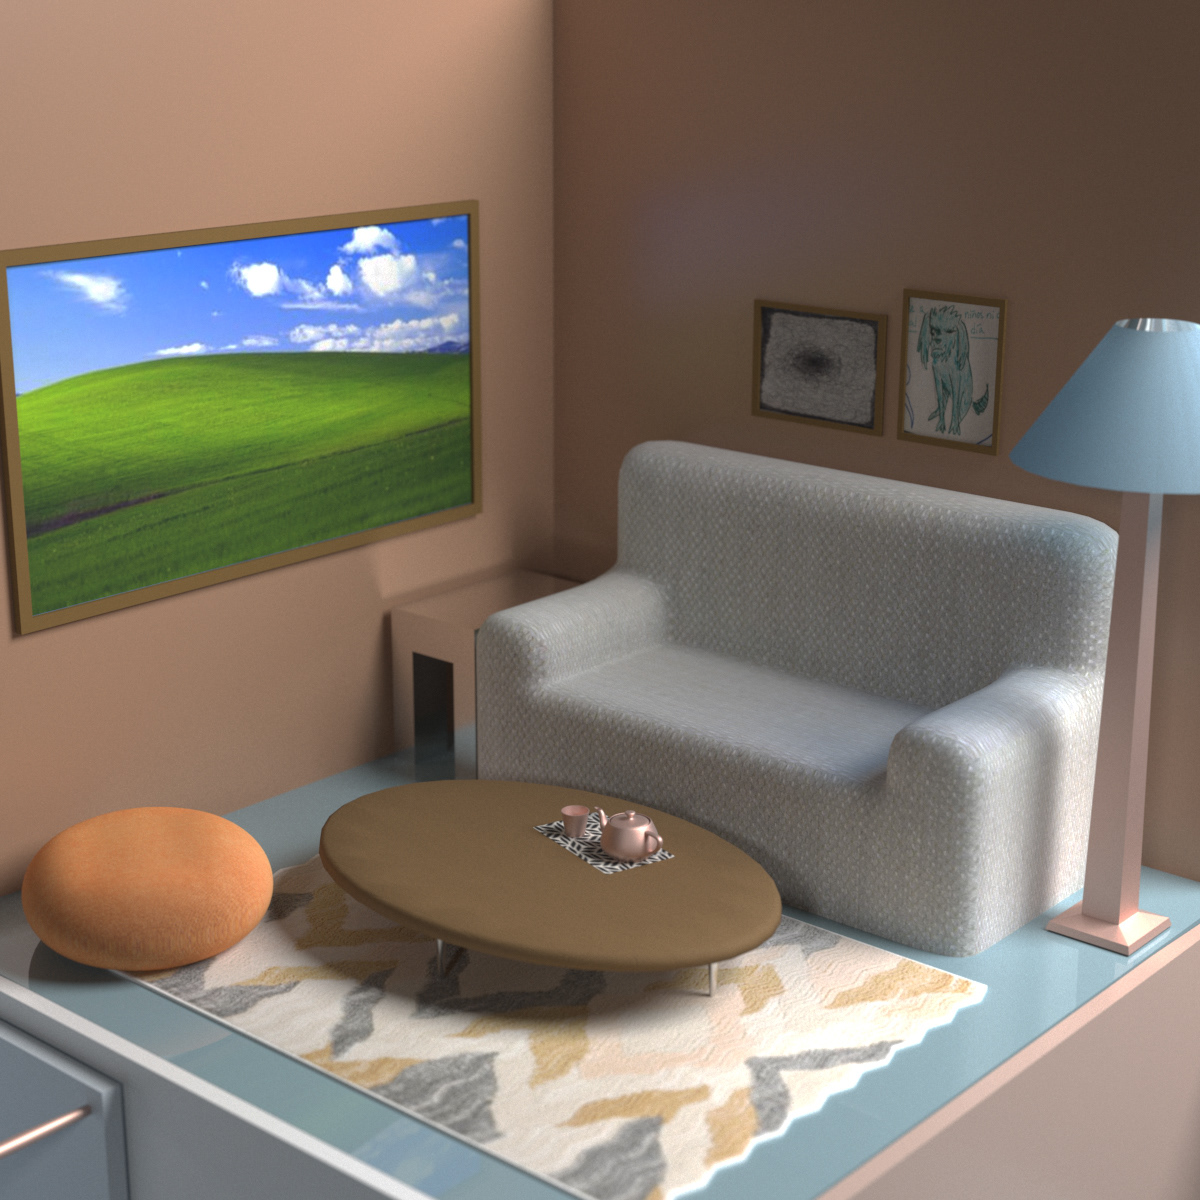 3ds max architecture Render interior design  CGI 3D dollhouse room design illumination 3d art